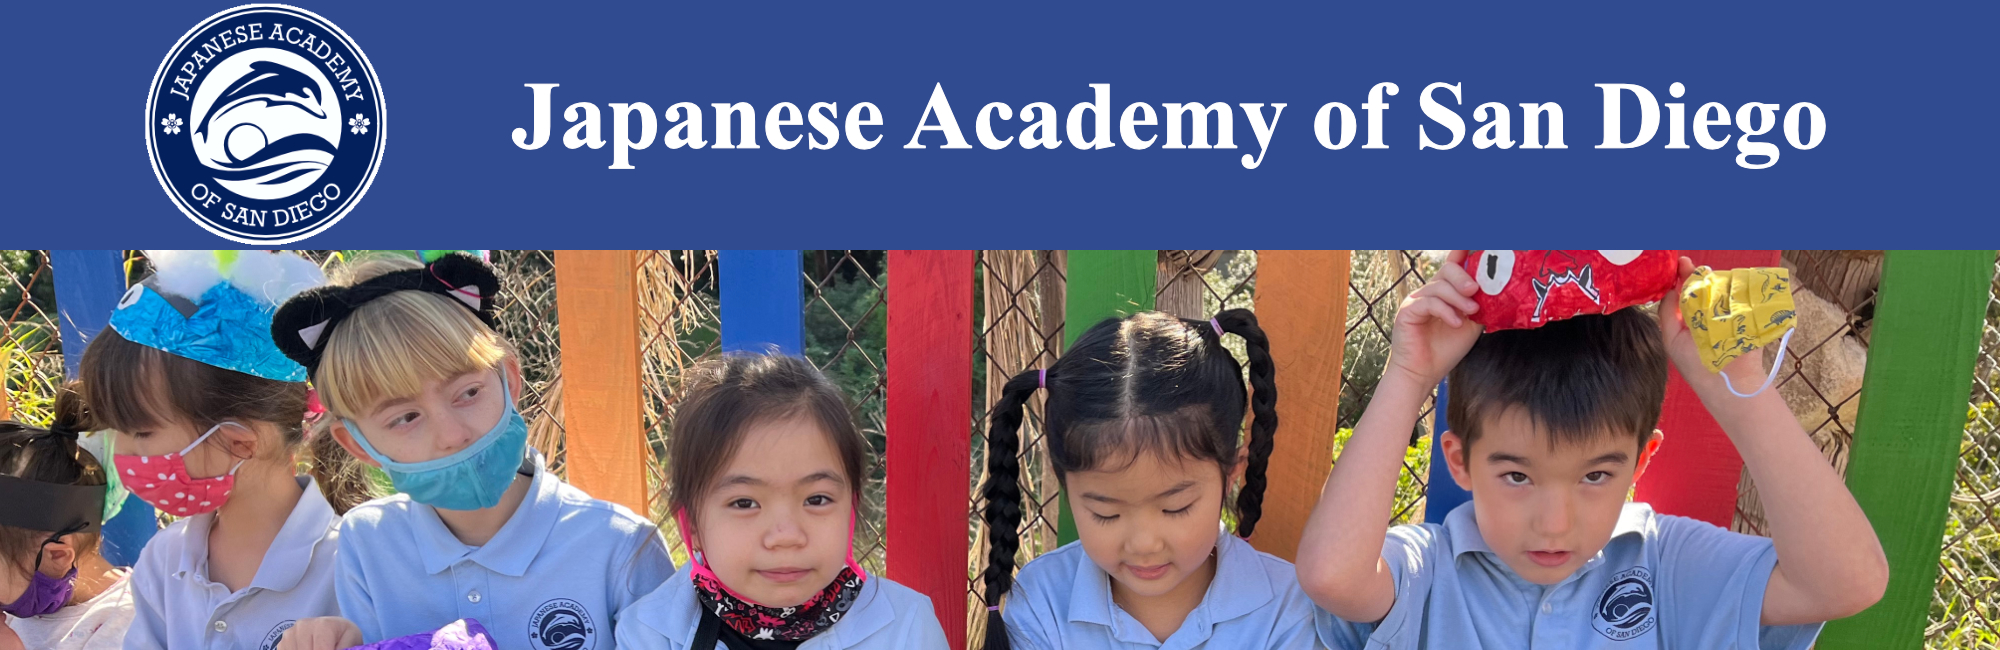 Japanese Academy of San Diego